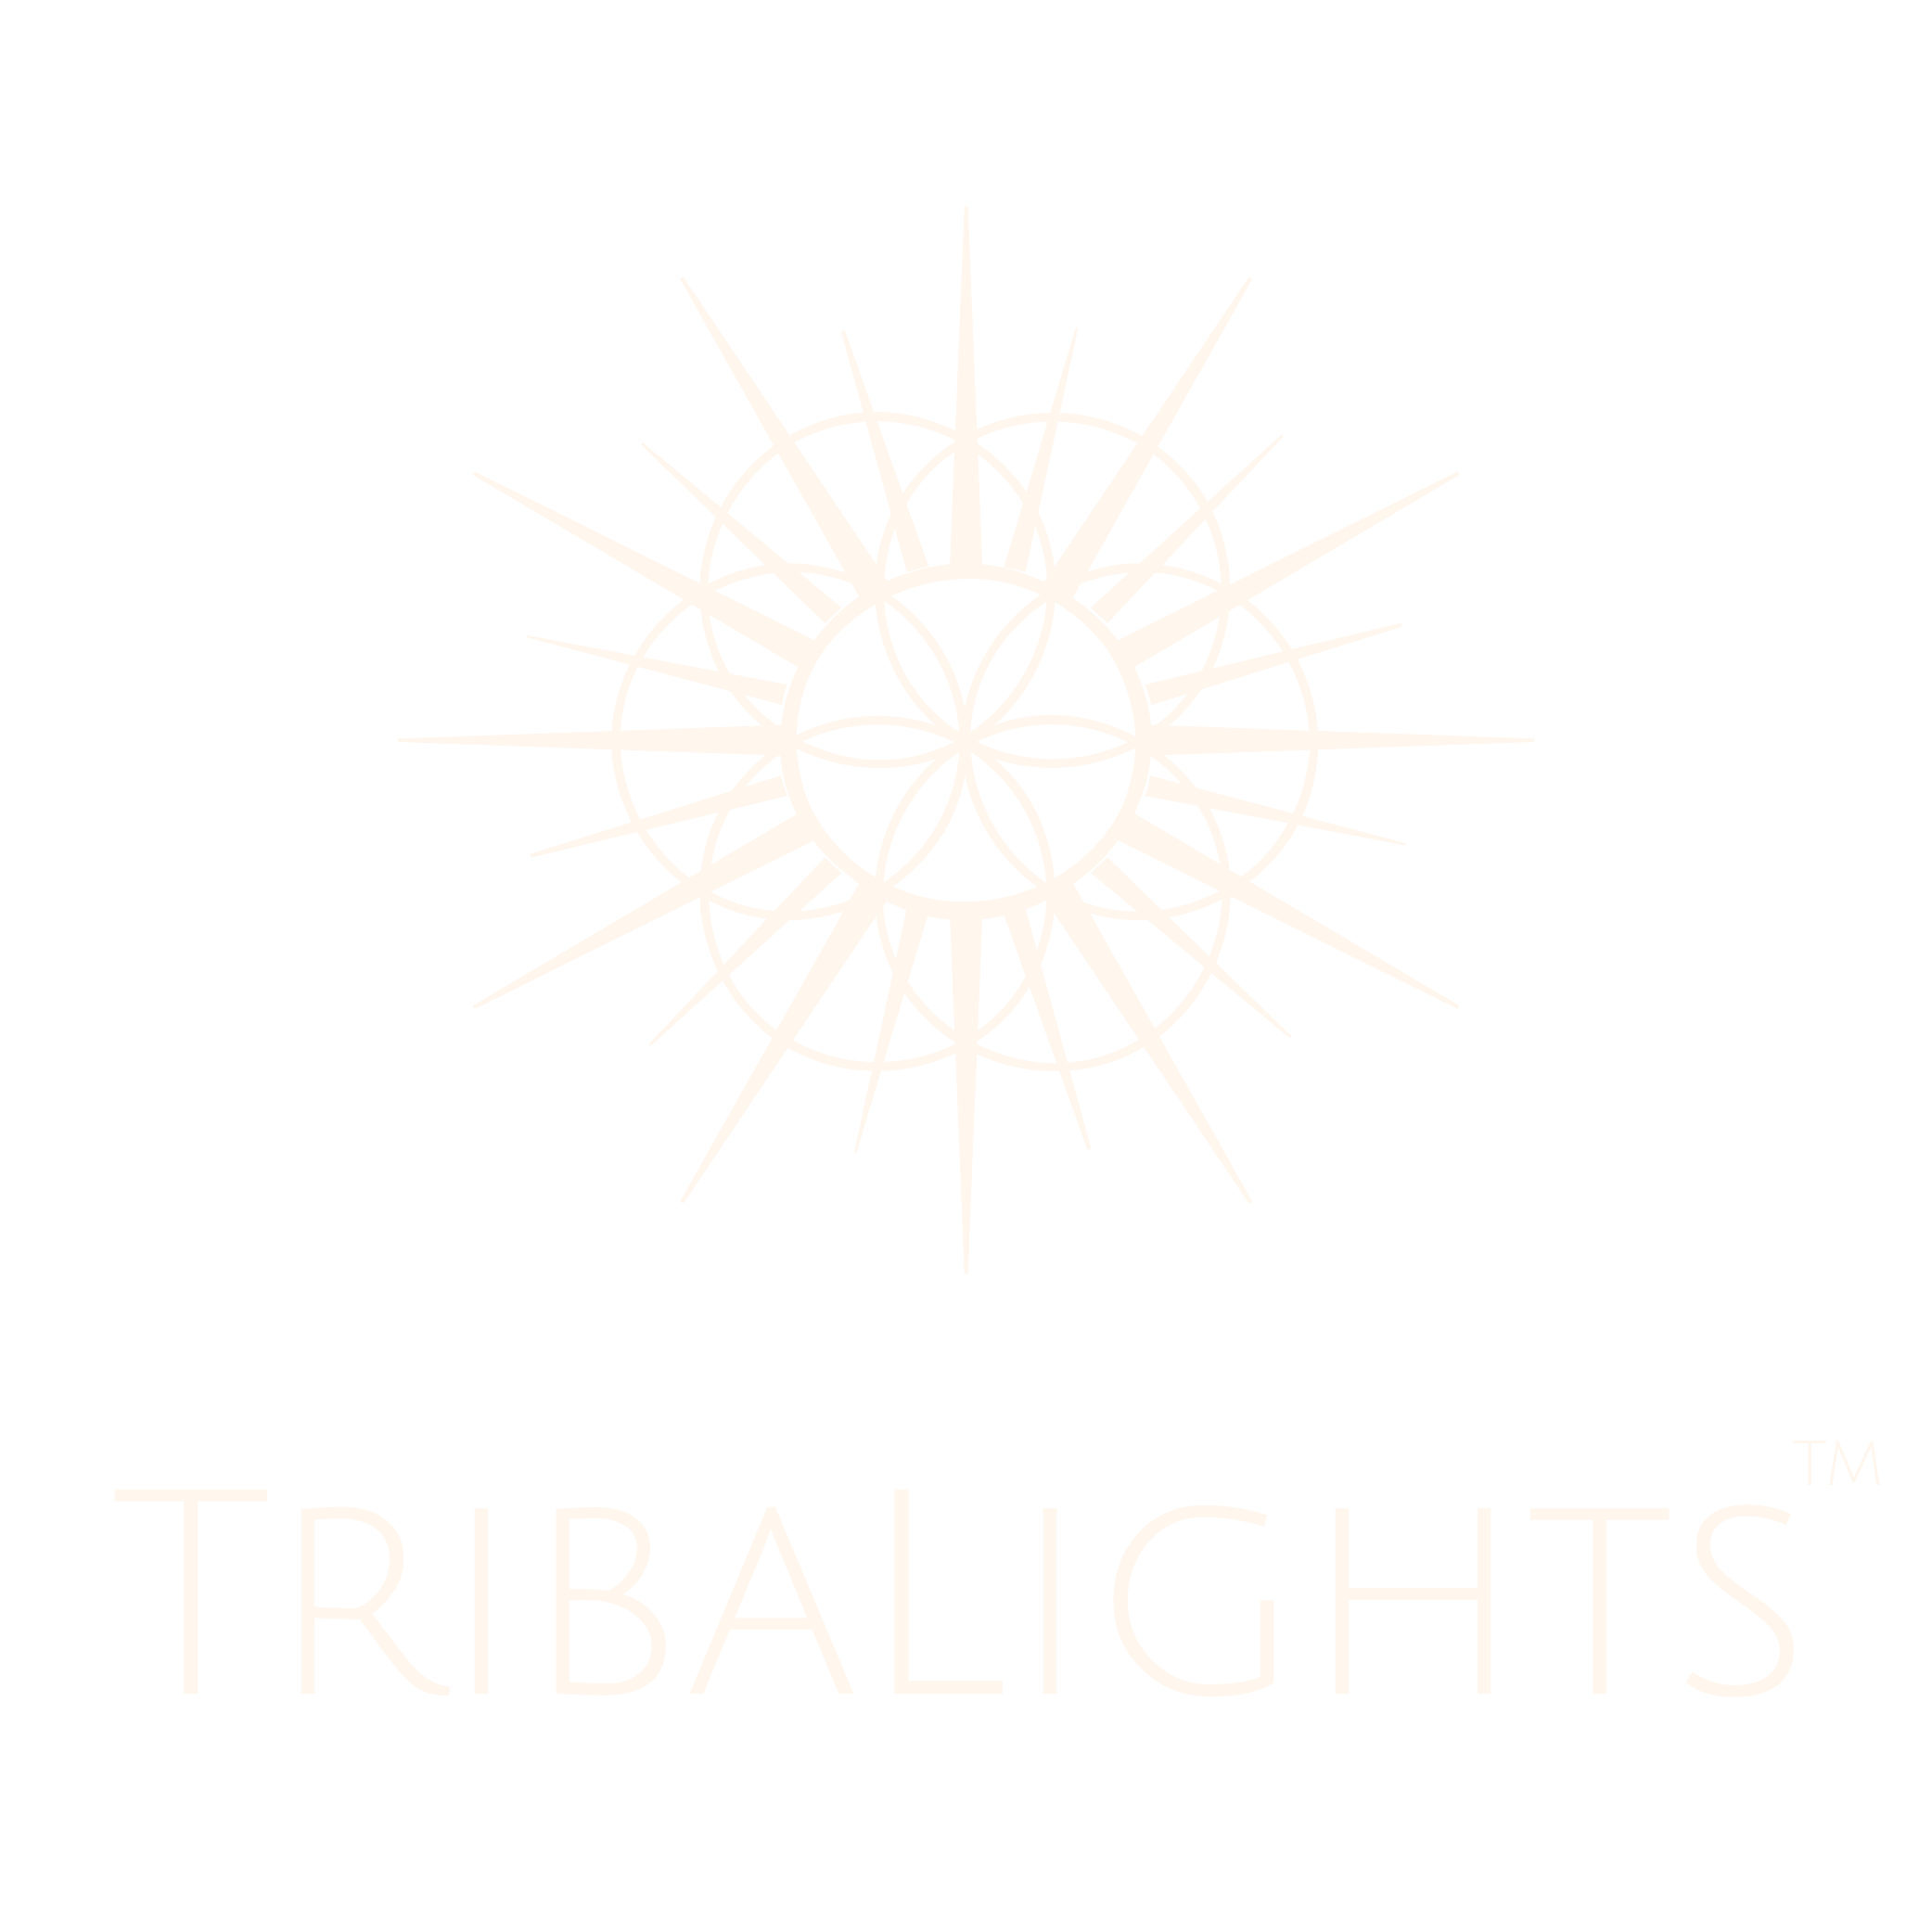 TribaLights logo